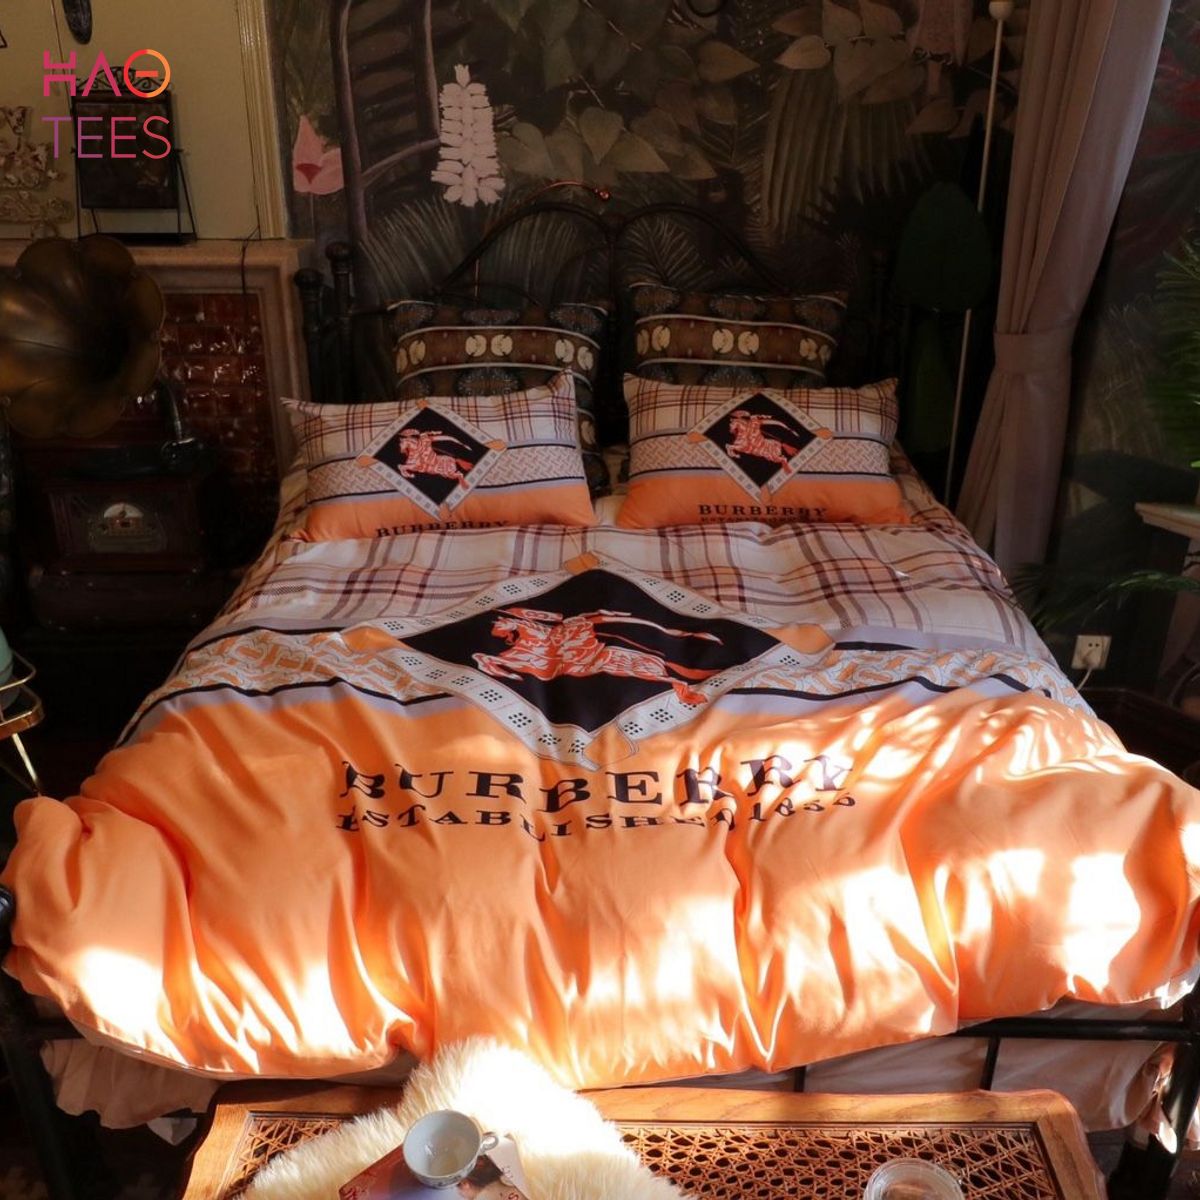 HOT Burberry Neon Orange Luxury Color Duvet Cover Bedding Set Limited Edition